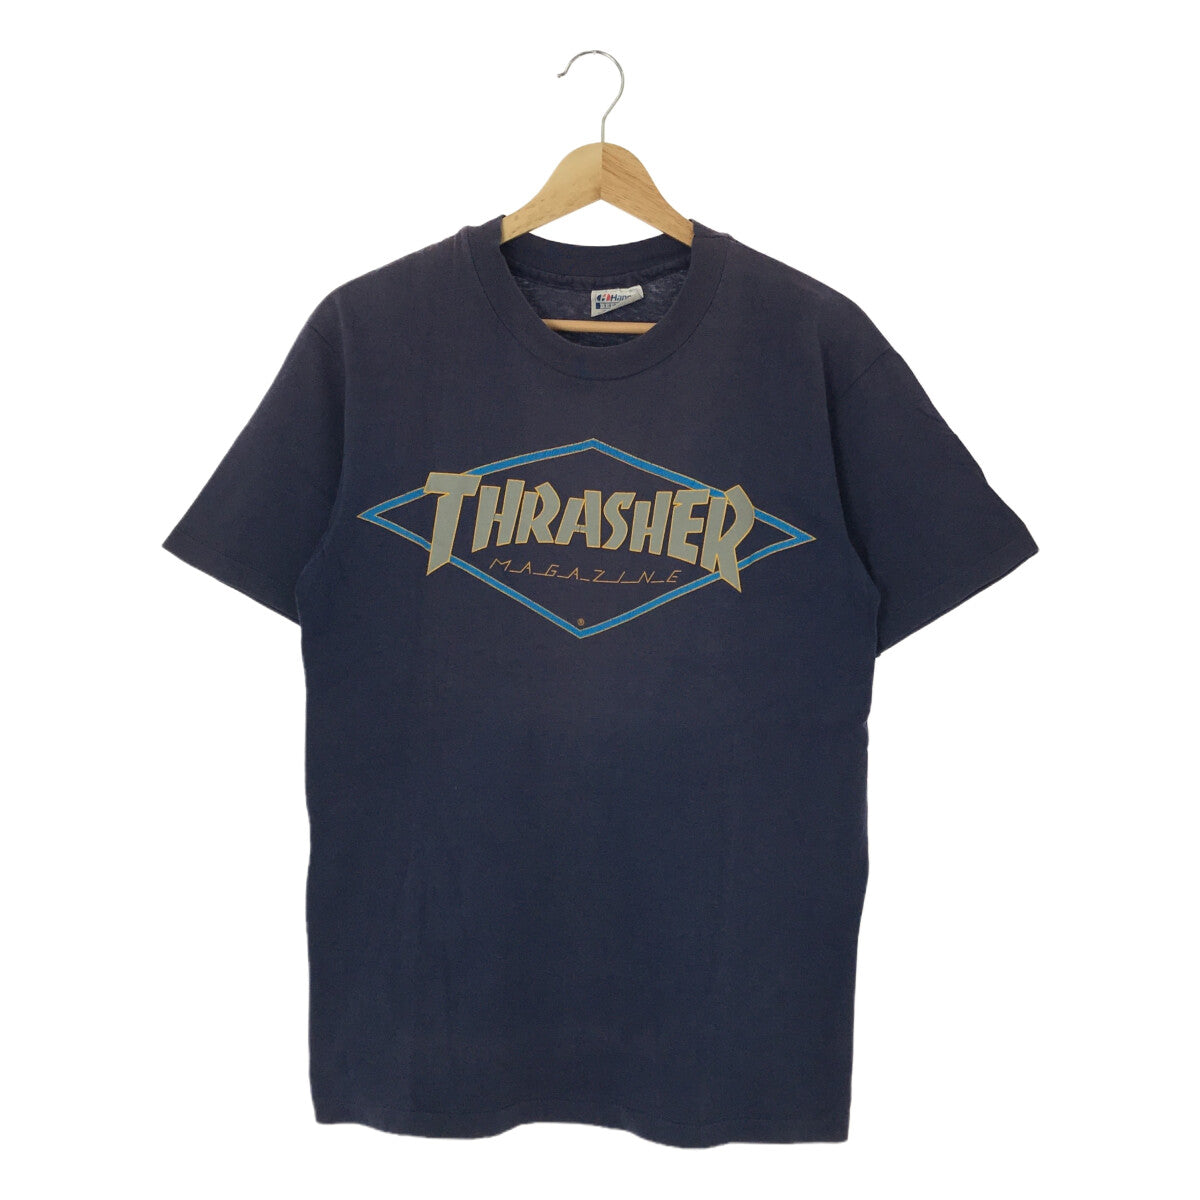 VINTAGE / ヴィンテージ古着 | 90s USA製 THRASHER シングルステッチ プリント Tシャツ | M | メンズ